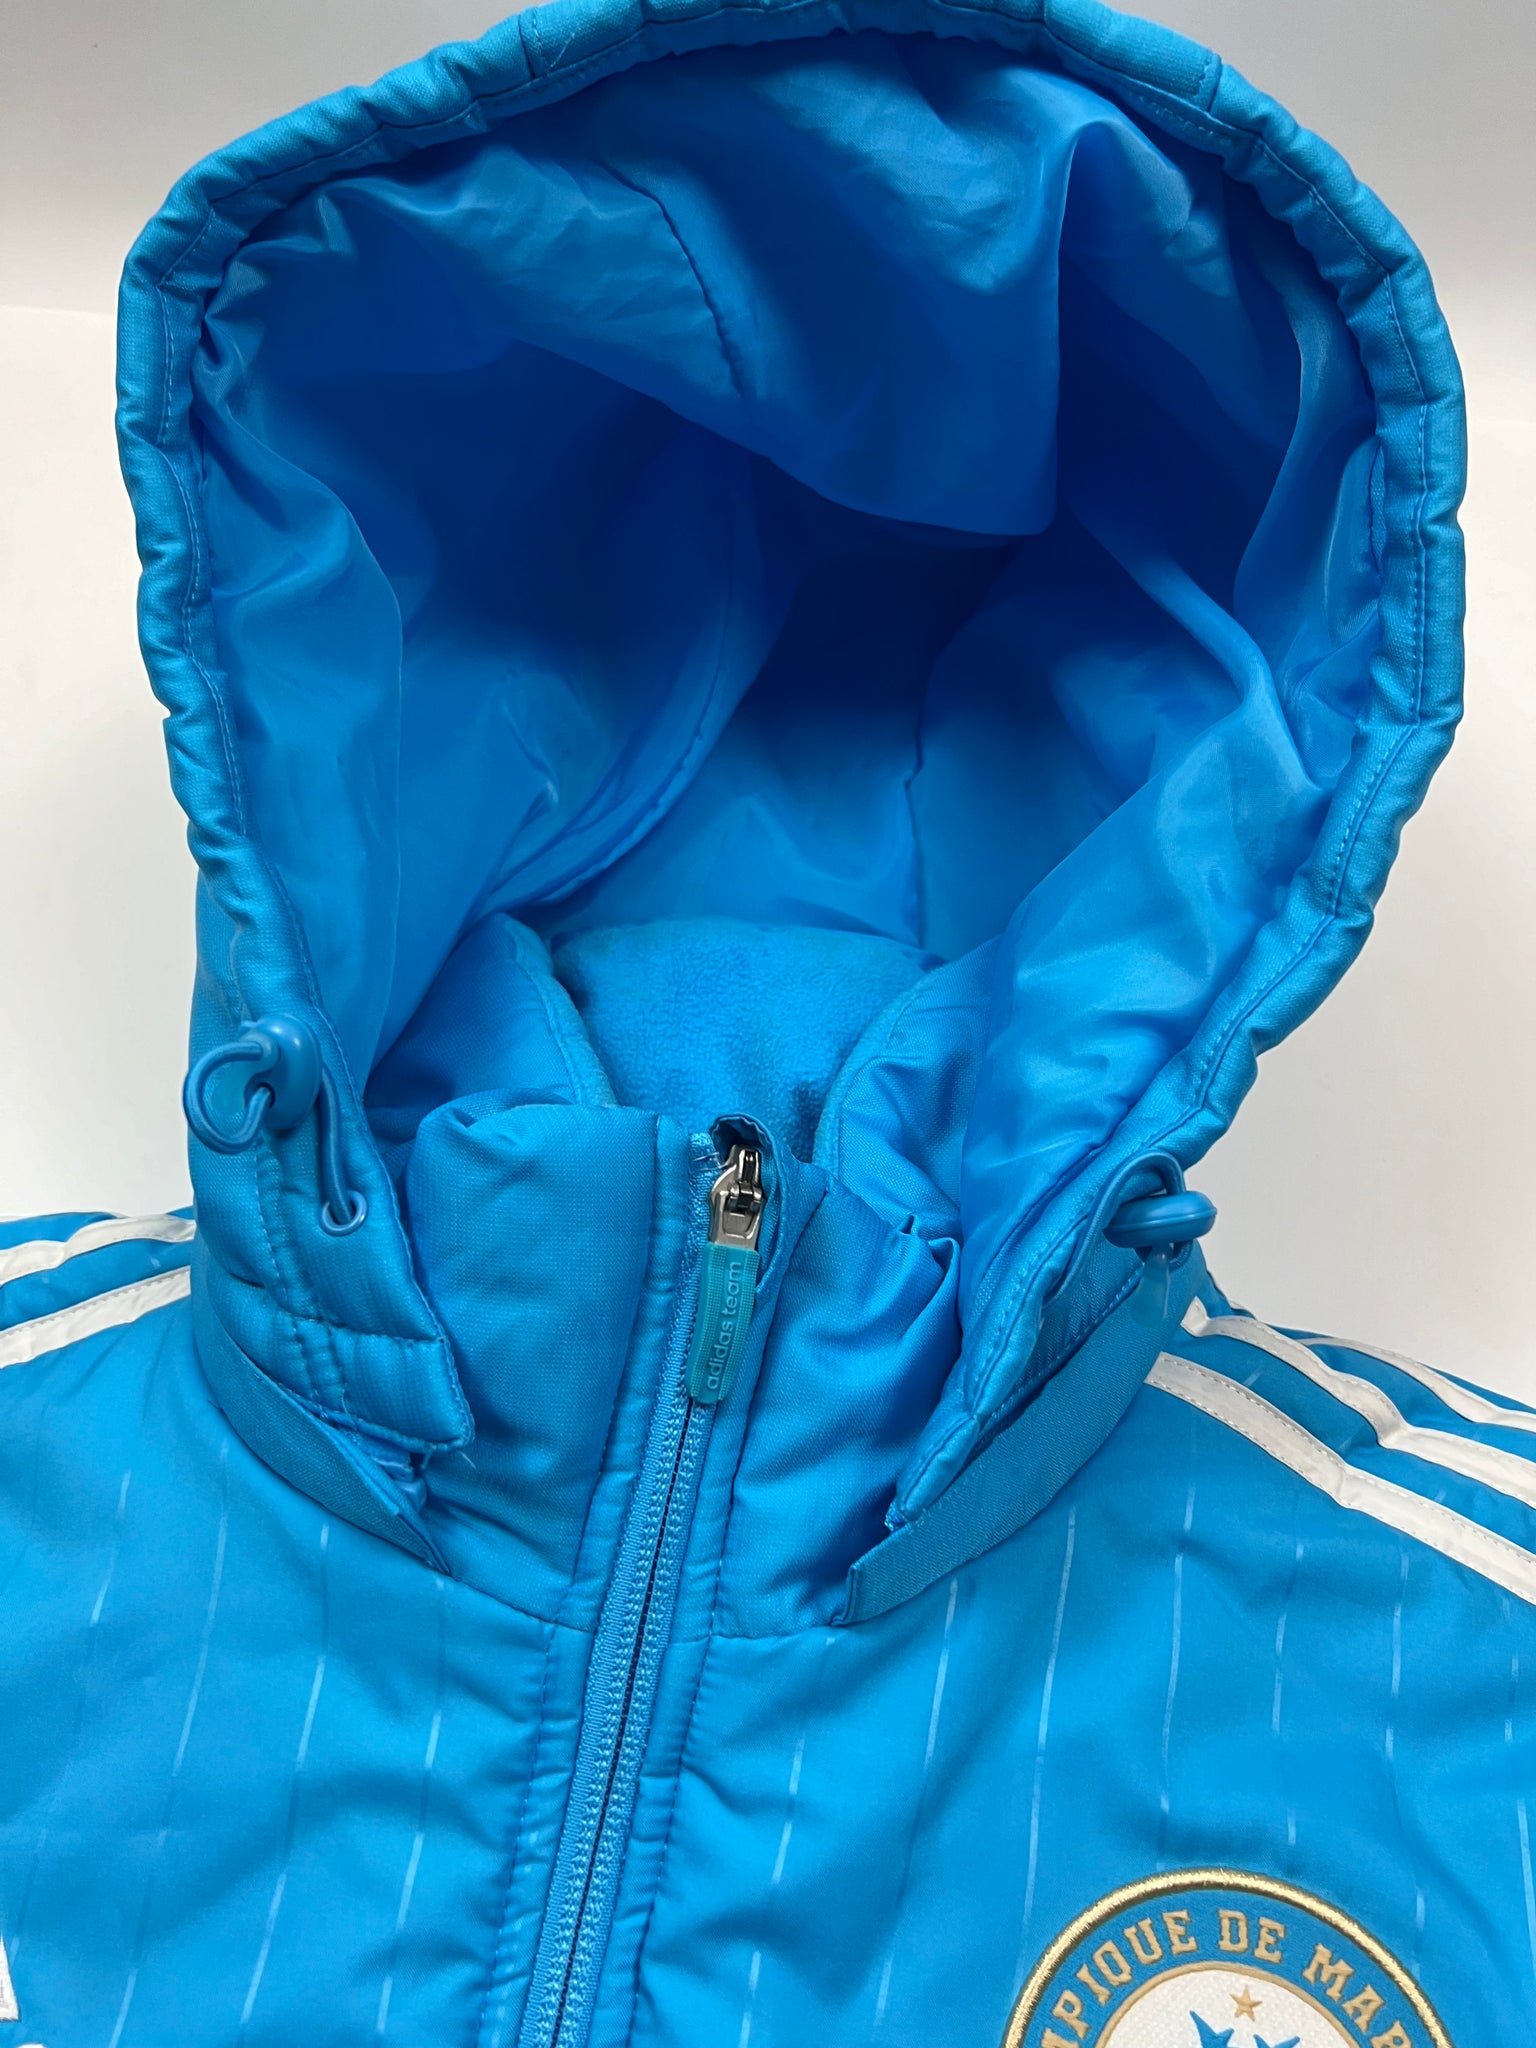 Adidas Olympique De Marseille Jacket (M)